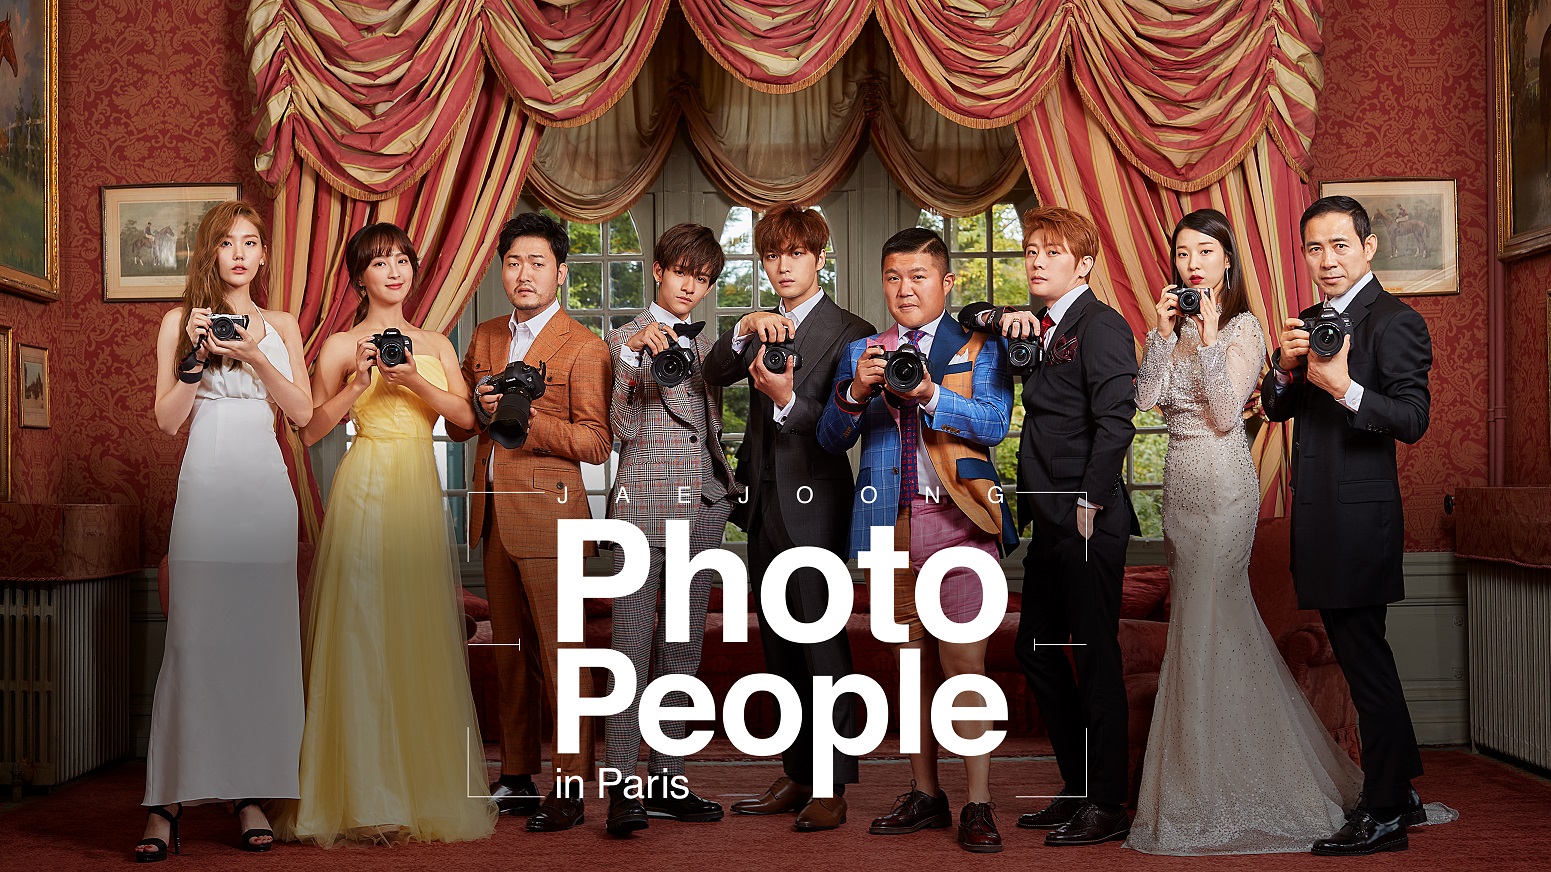 JAEJOONG Photo People in Paris vol.01 [DVD] z2zed1b